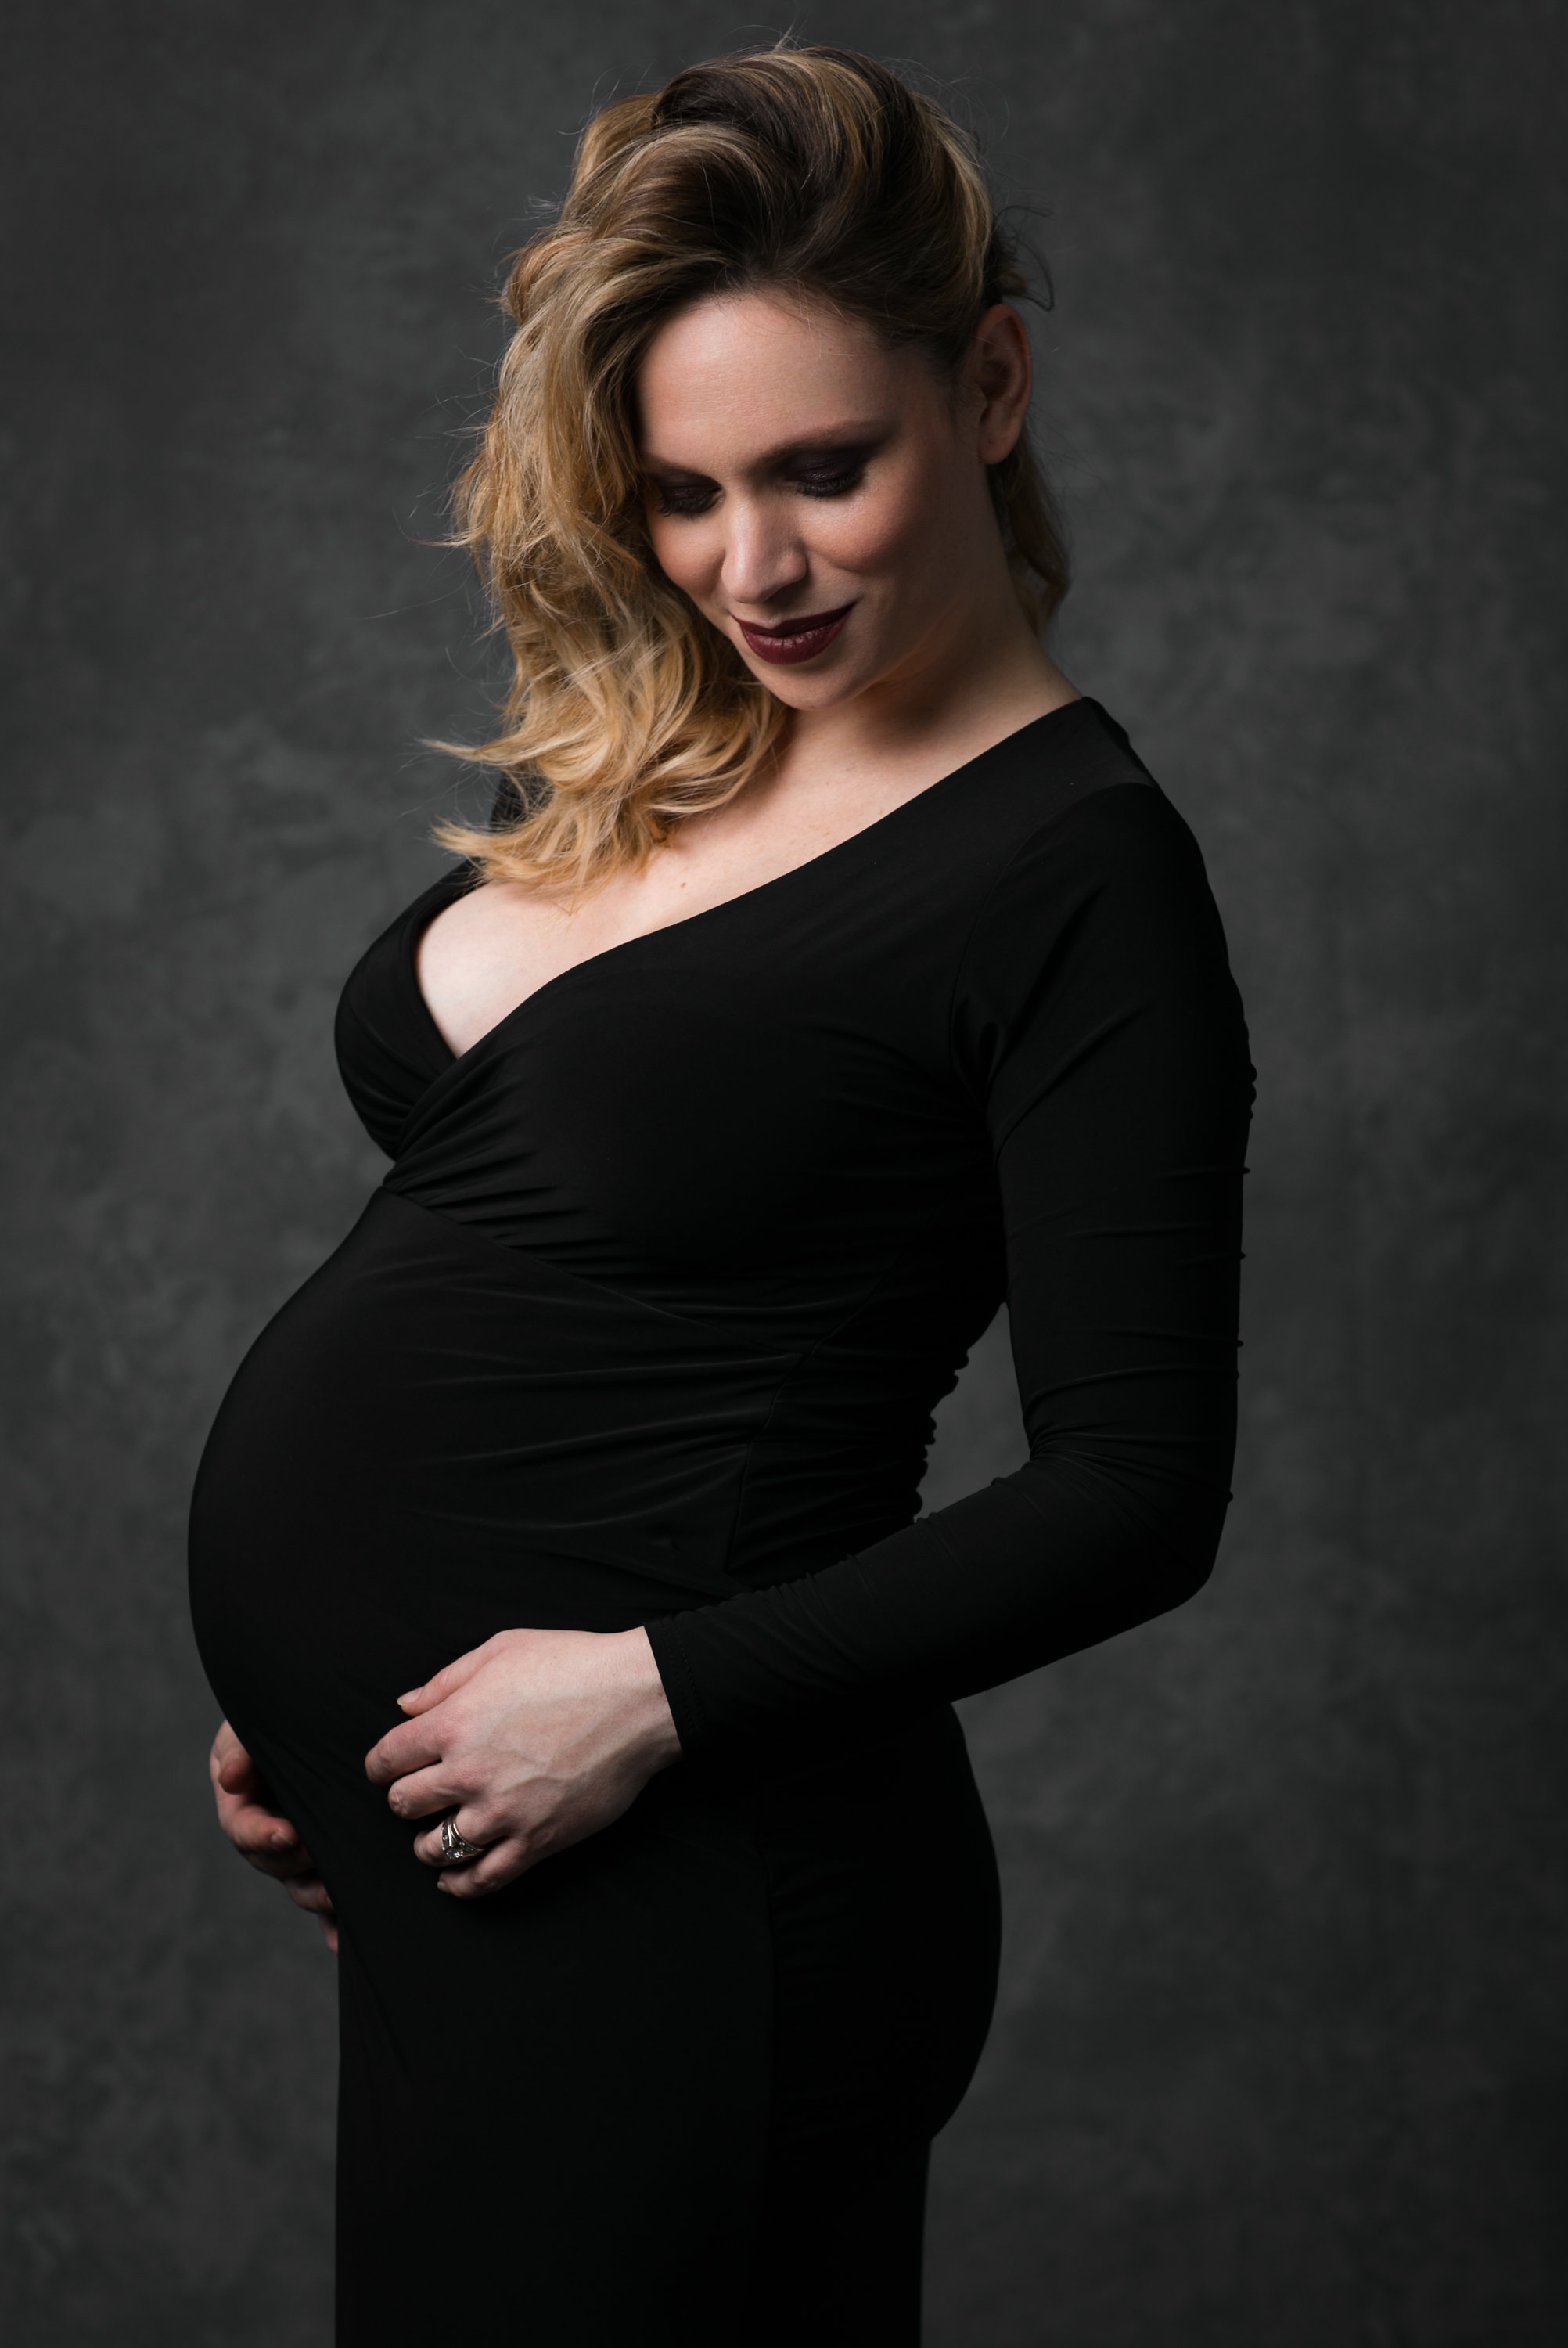 maygen kardash maternity by nicole romanoff 3.jpg